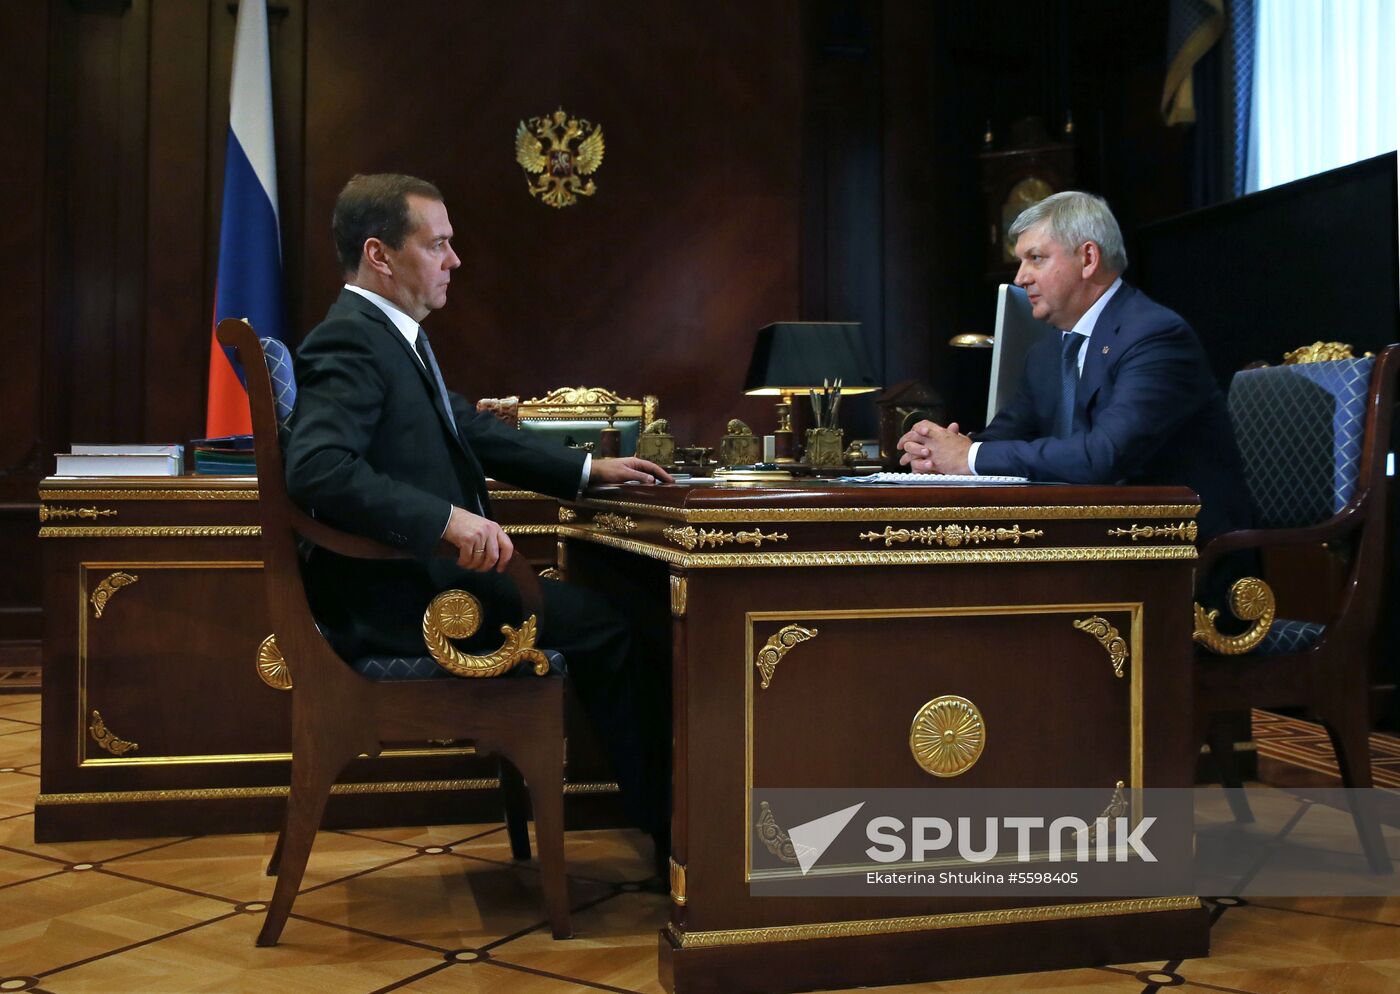 Prime Minister Medvedev meets with Acting Governor of Voronezh Region Gusev